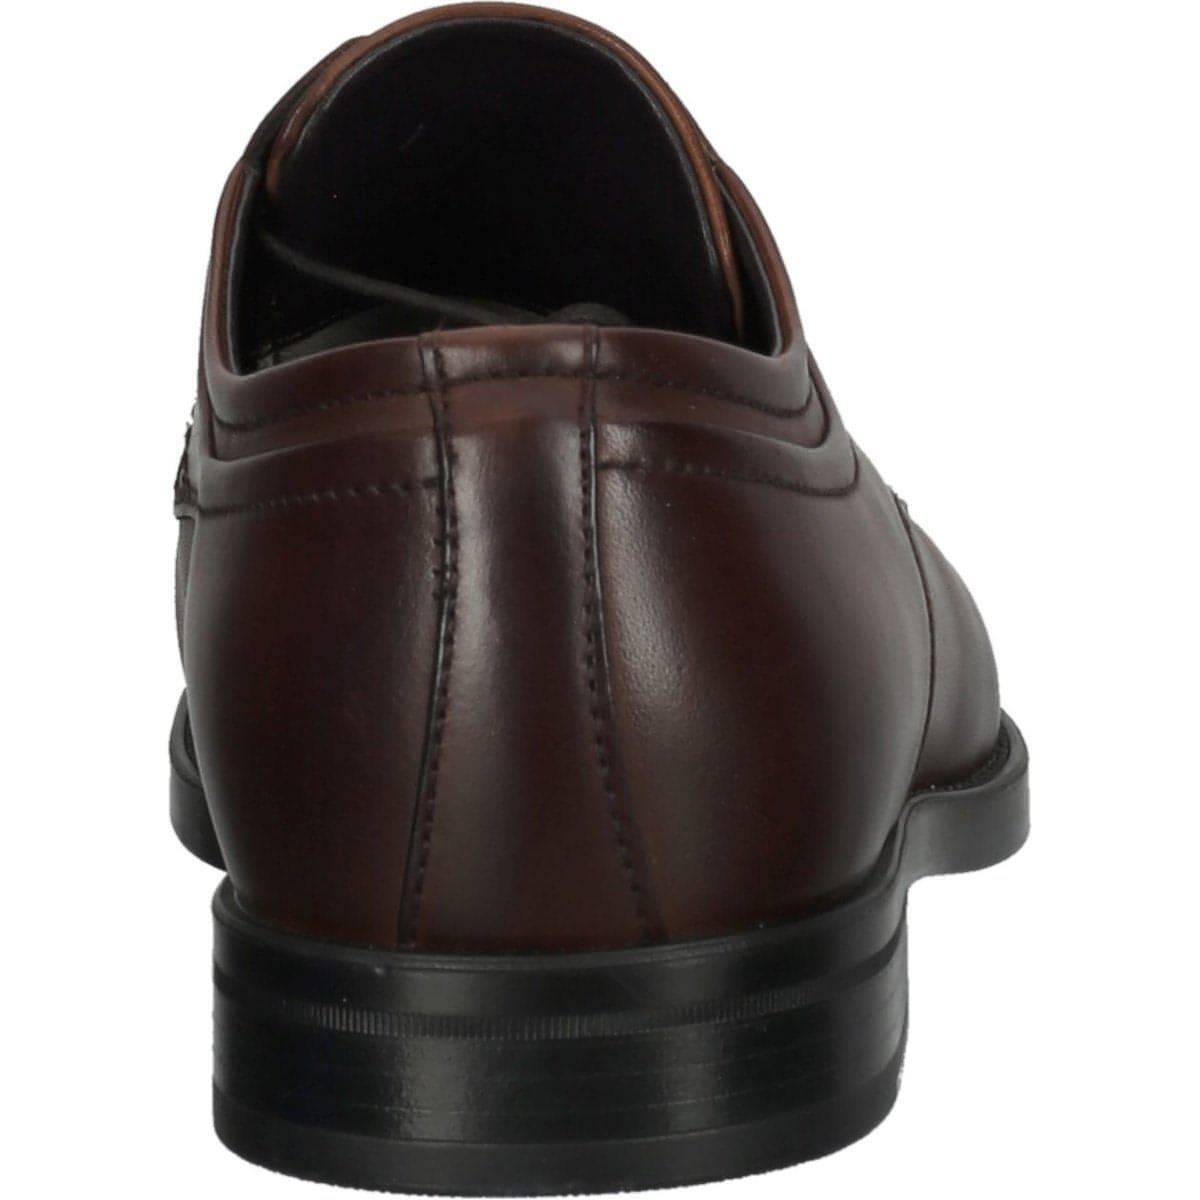 MERCEDES vyriški rudi klasikiniai batai